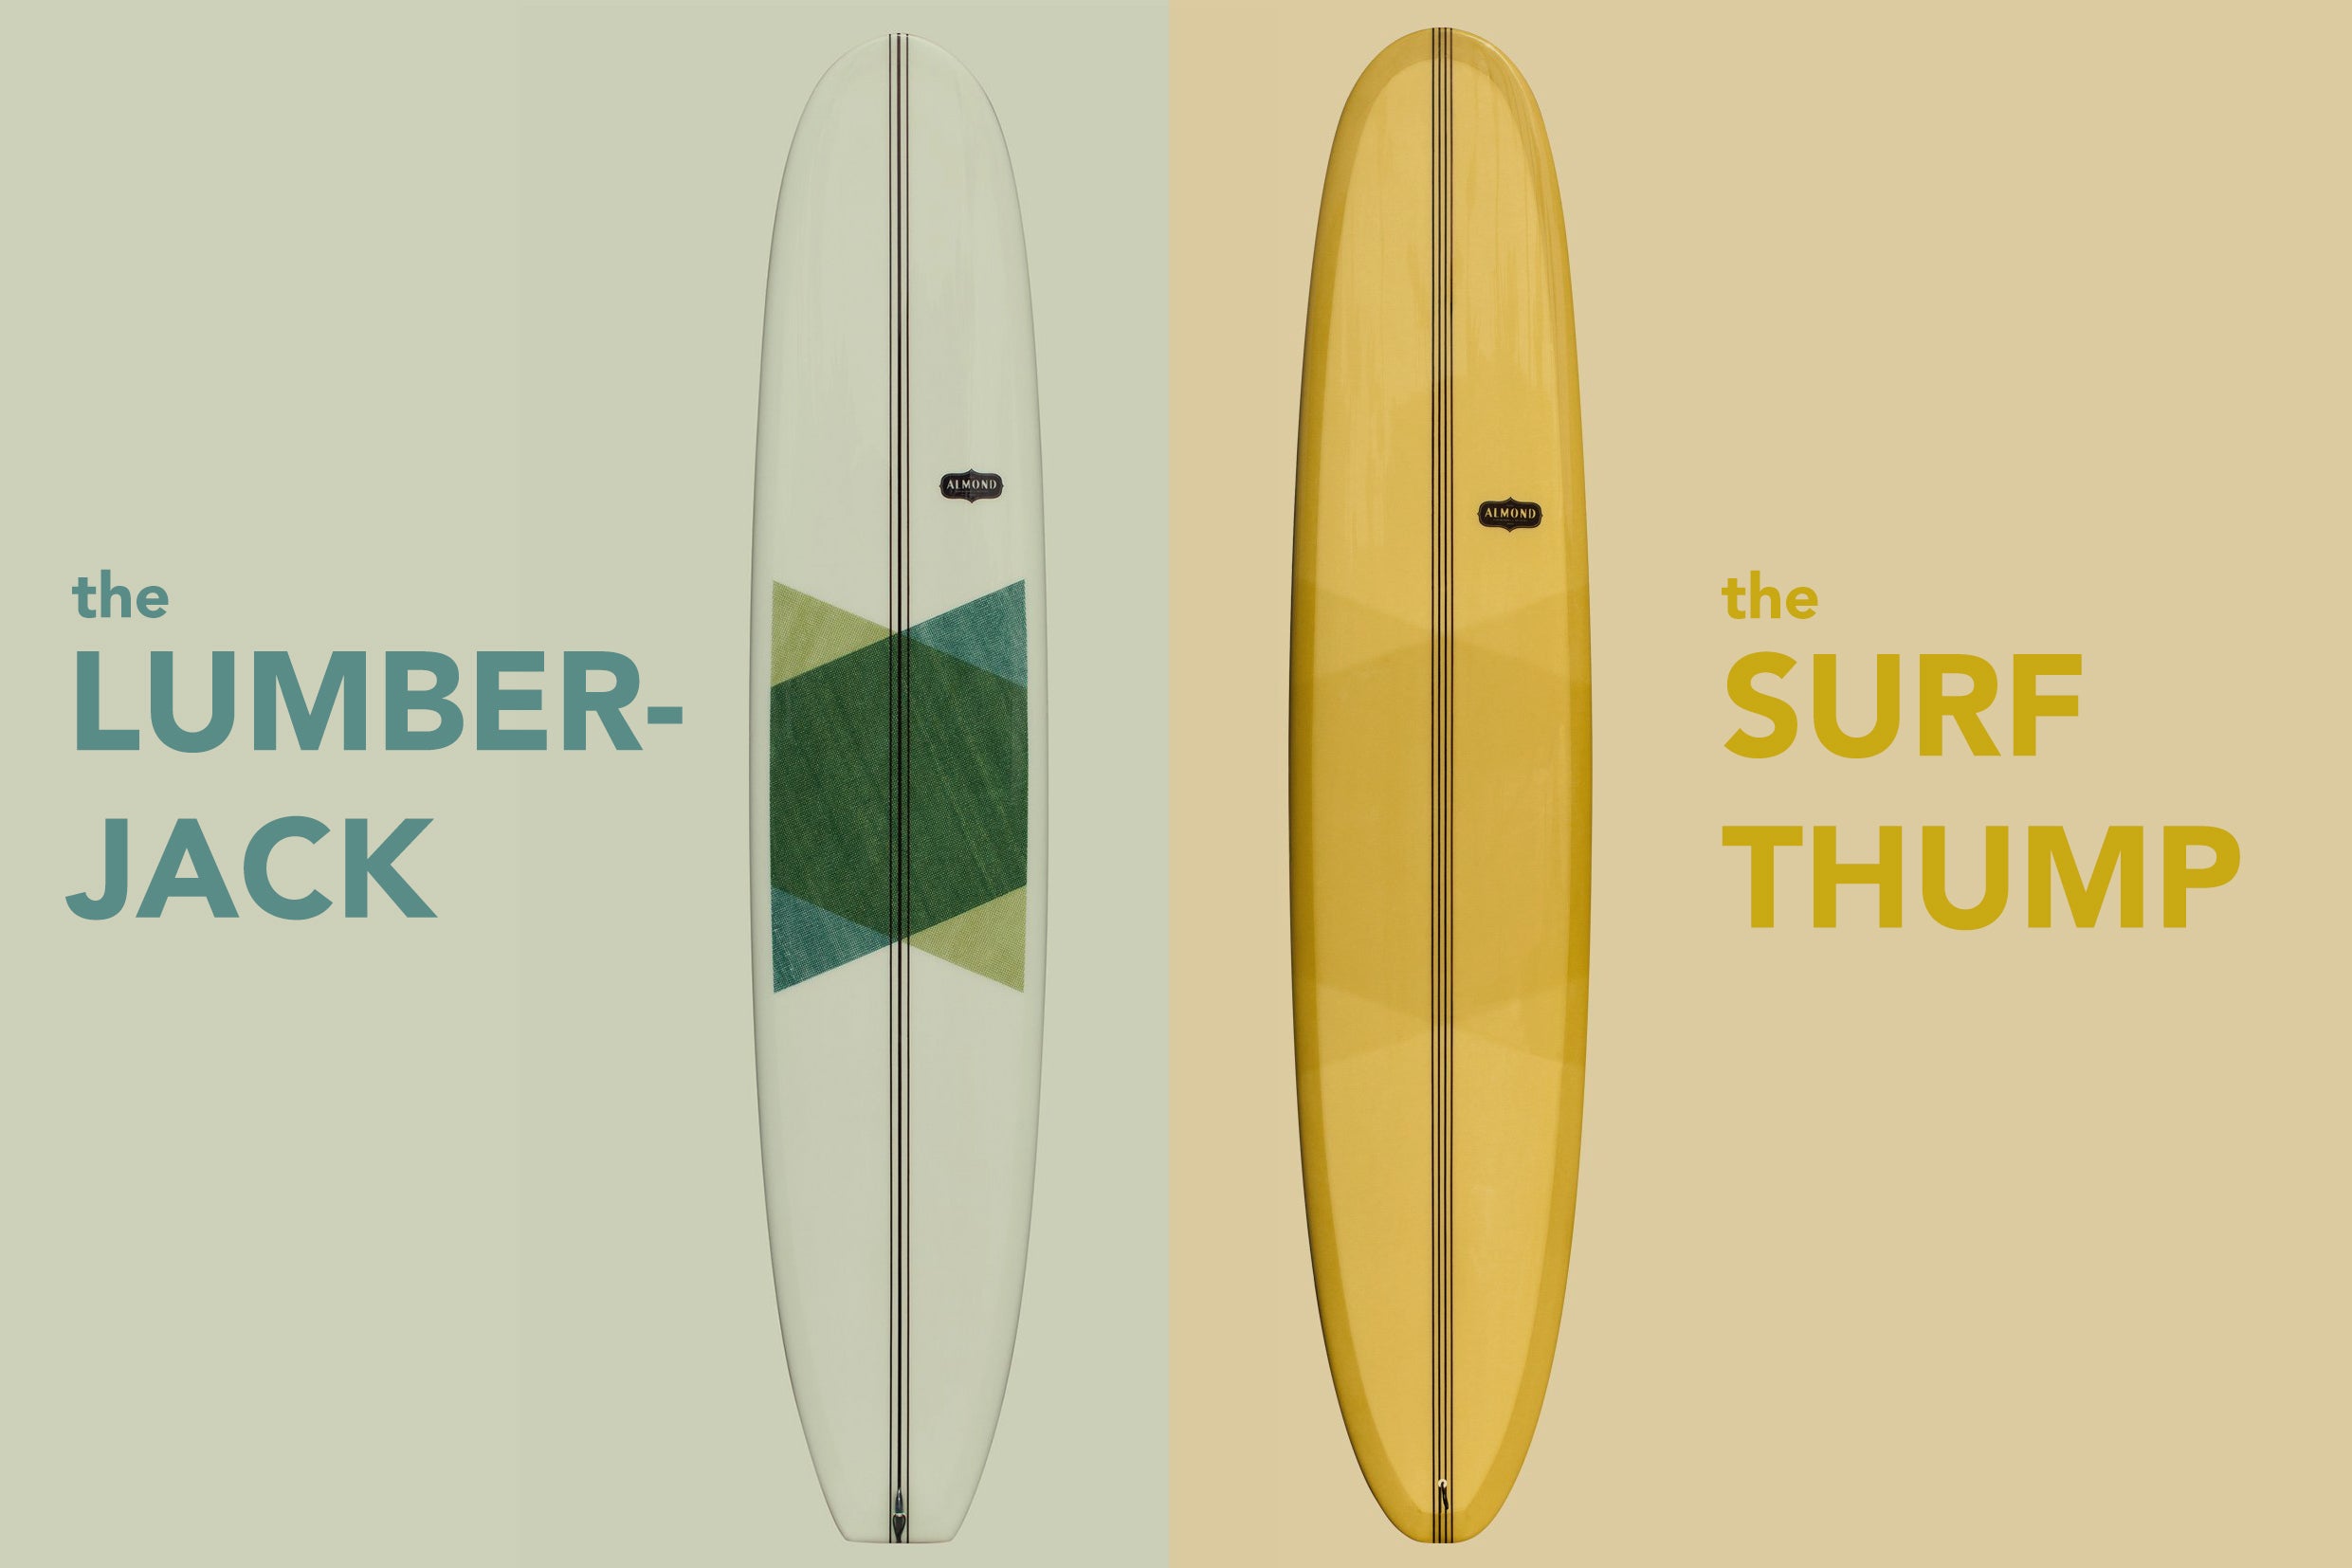 Lumberjack vs. Surf Thump